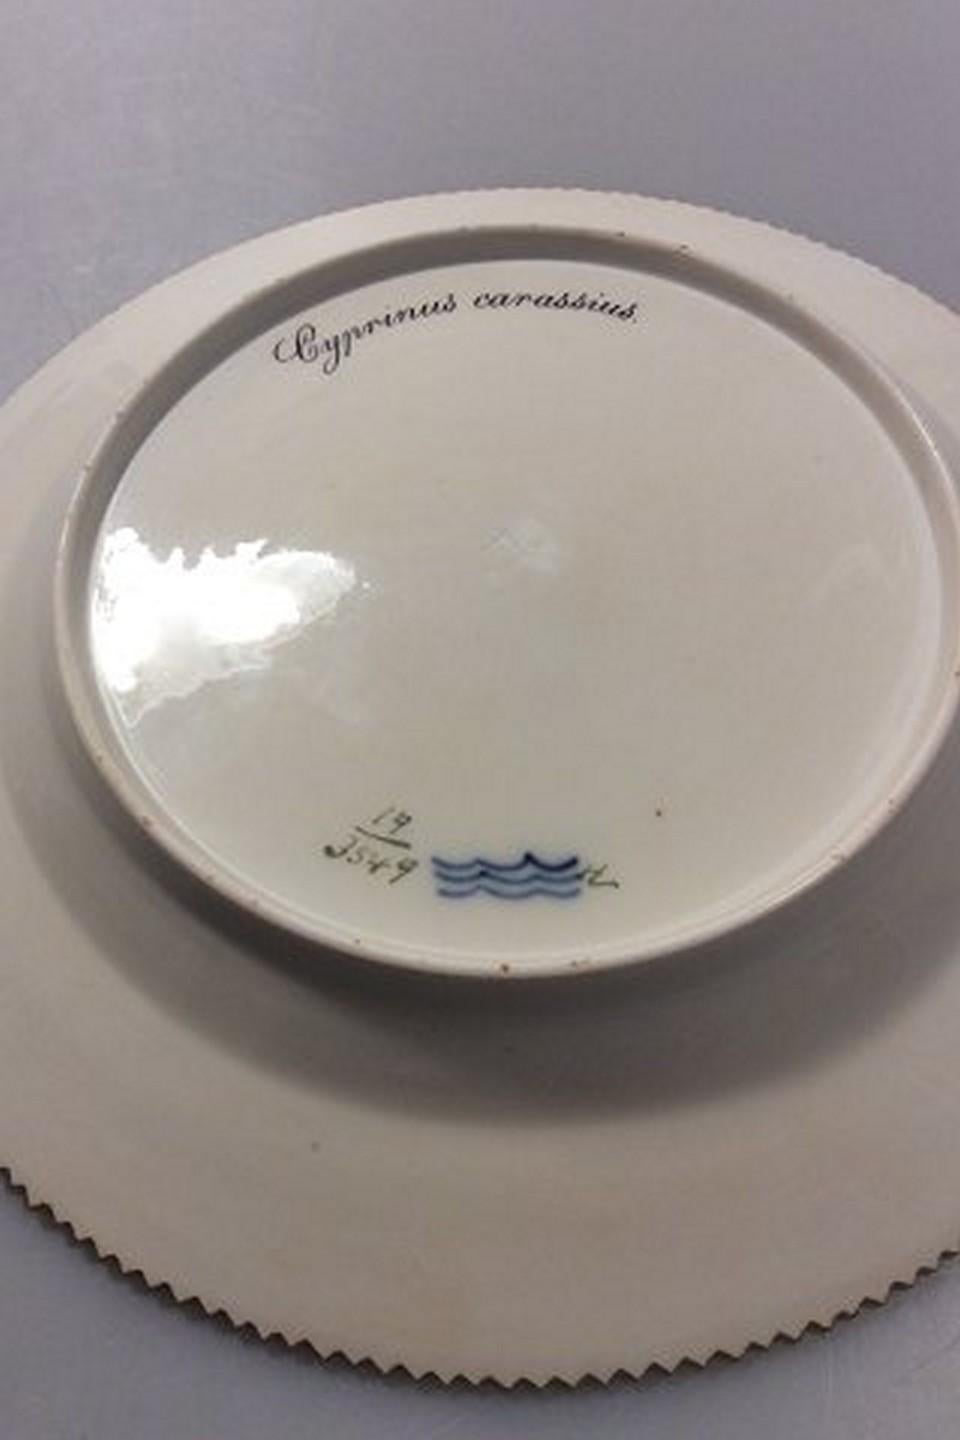 Royal Copenhagen flora Danica fish plate #19/3549. Measures 25cm / 9 27/32